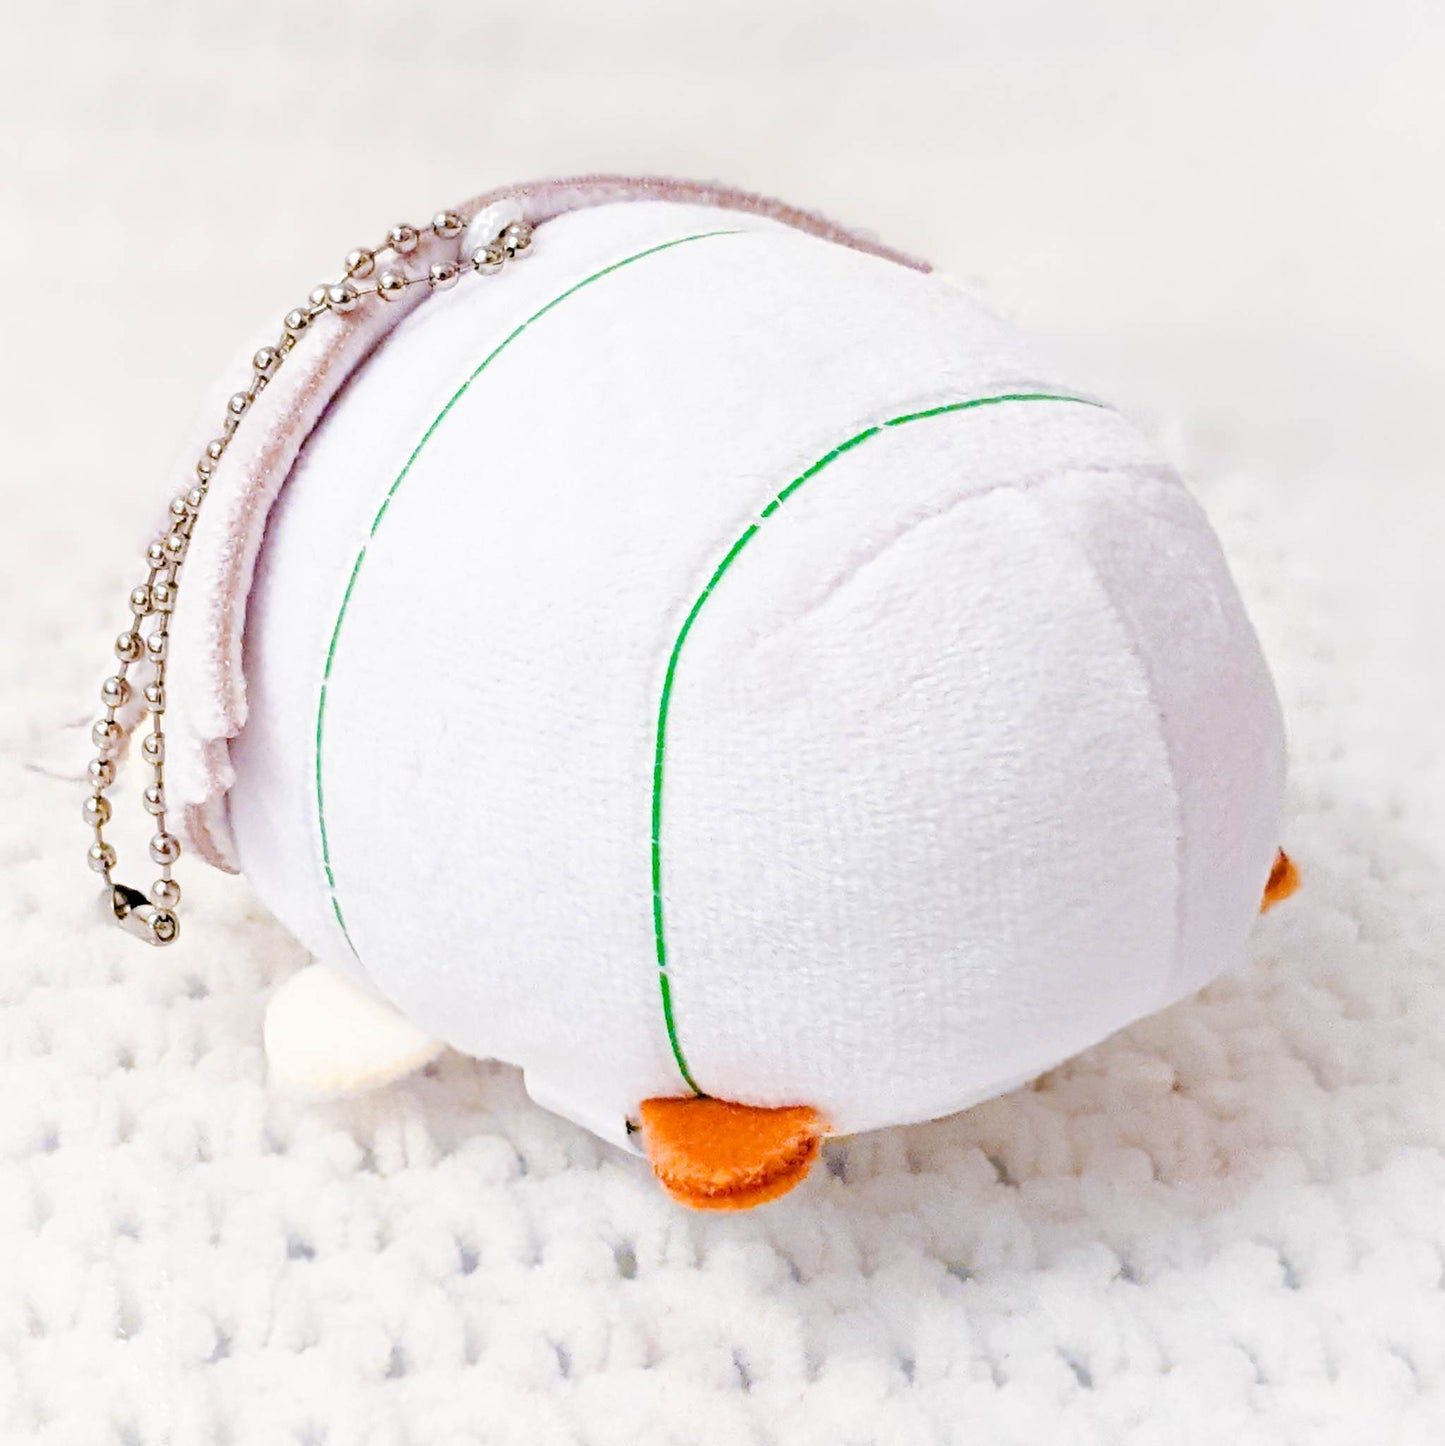 The Promised Neverland Anime Mini Mascot Cute Toy Plush Keychain